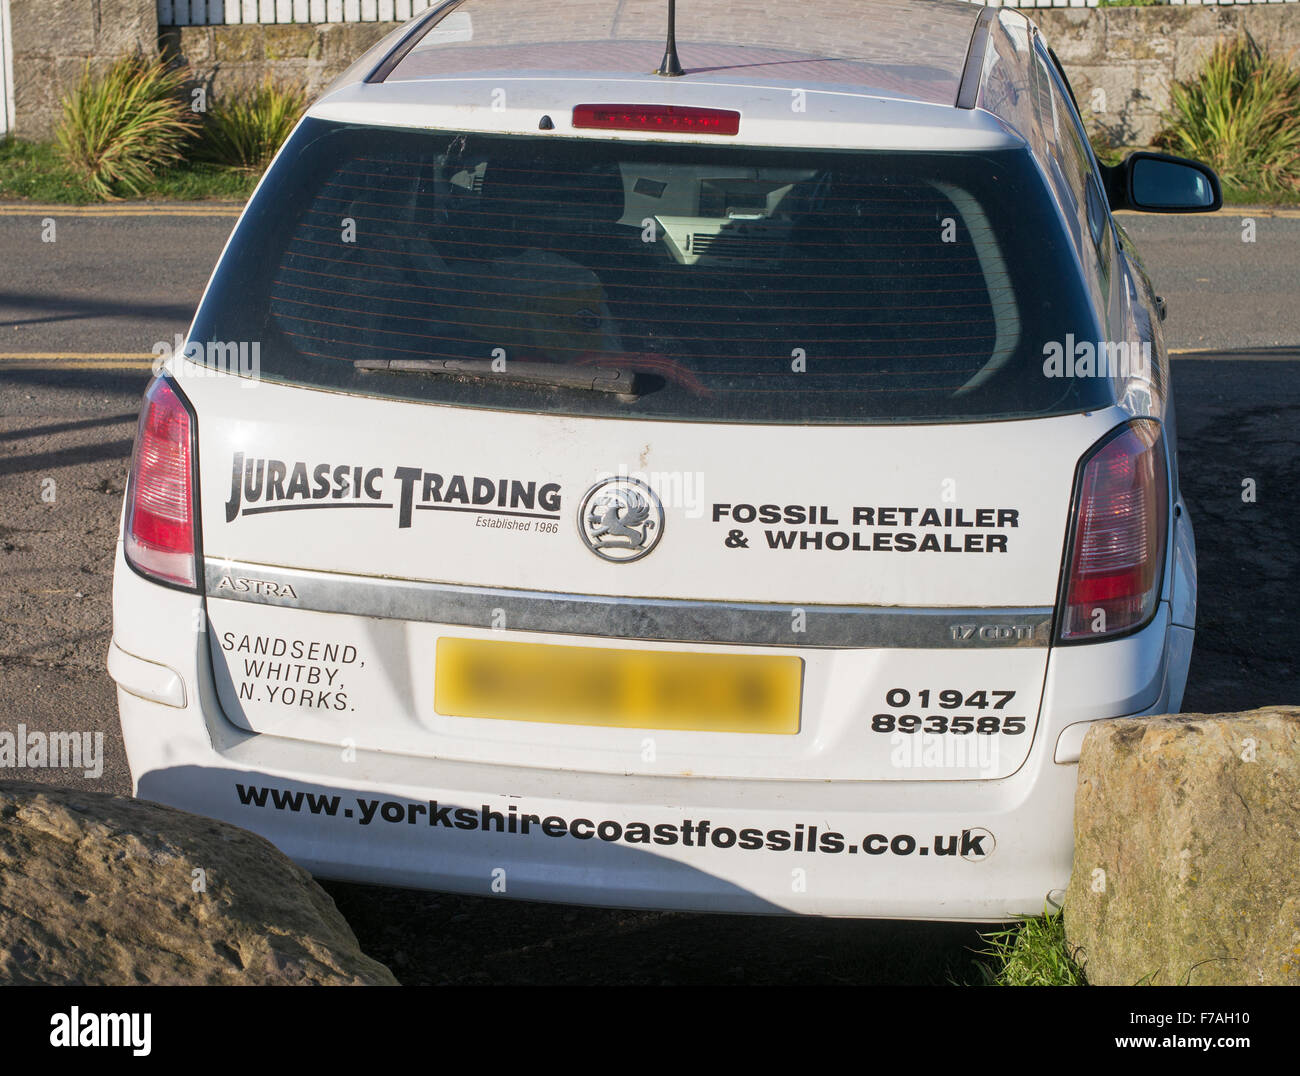 Jurassic Trading, automóvil perteneciente al minorista de combustibles fósiles, Puerto Mulgrave, North Yorkshire, Inglaterra, Reino Unido. Foto de stock